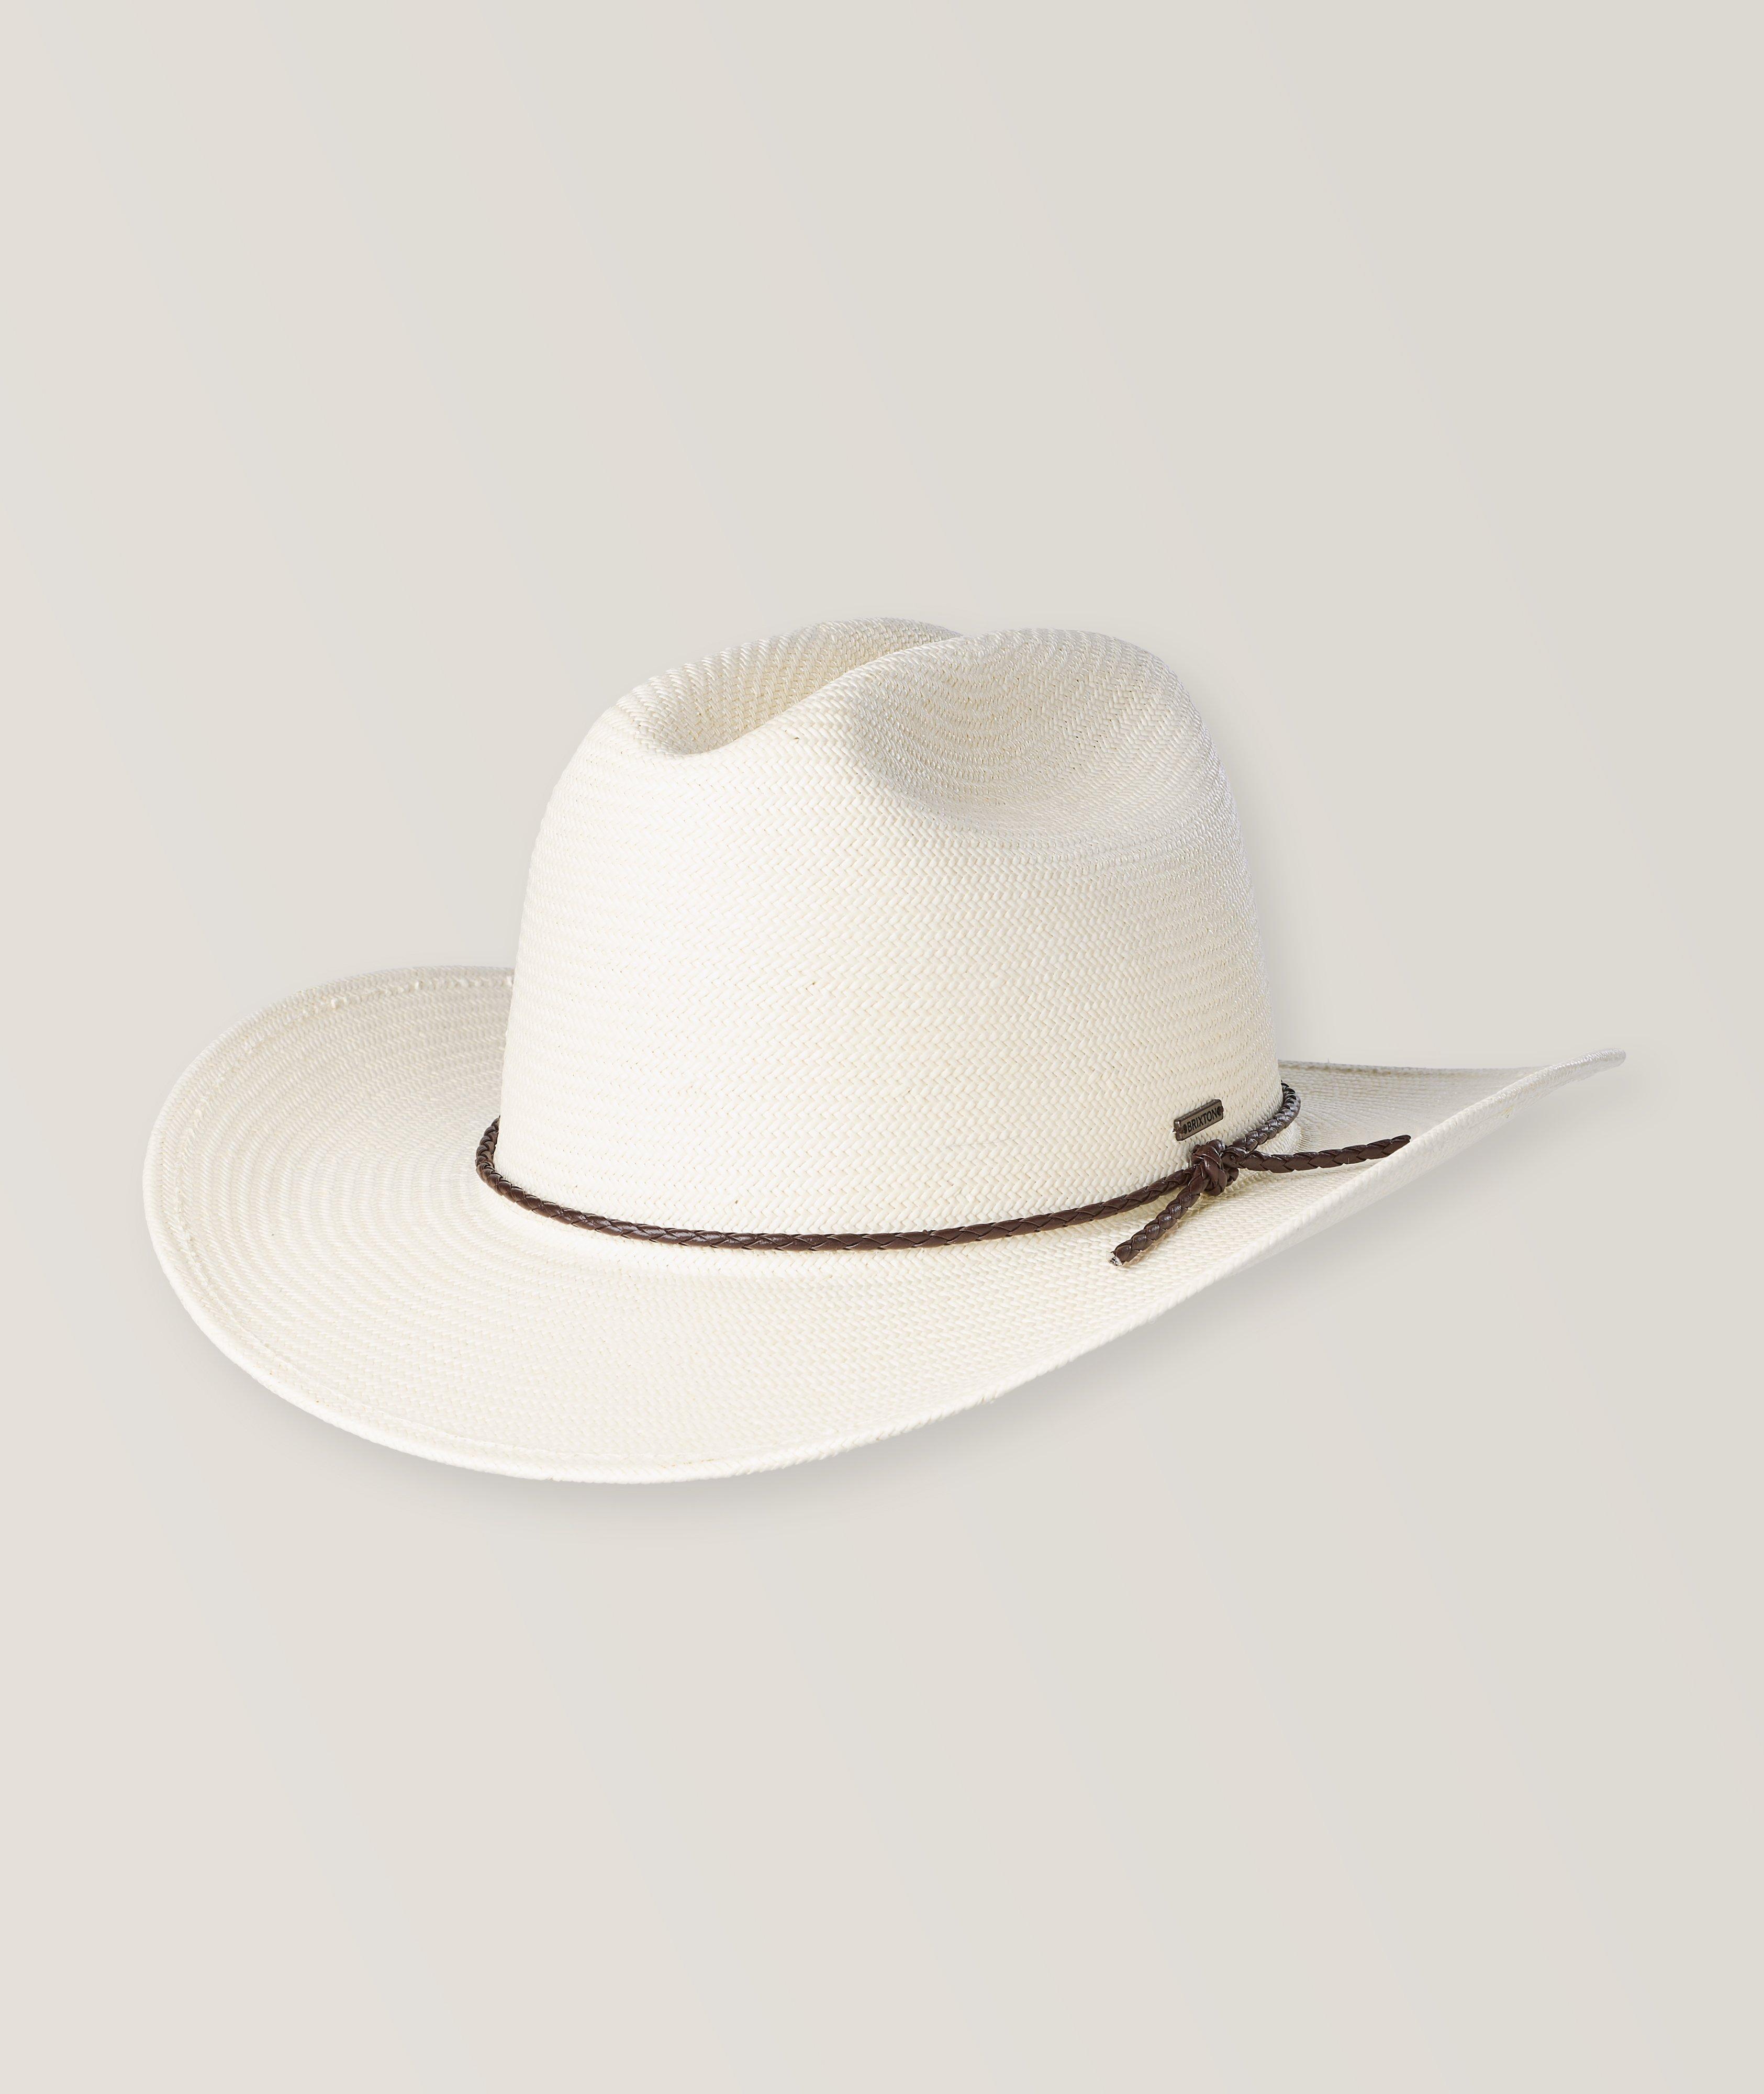 Range Shantung Straw Cowboy Hat